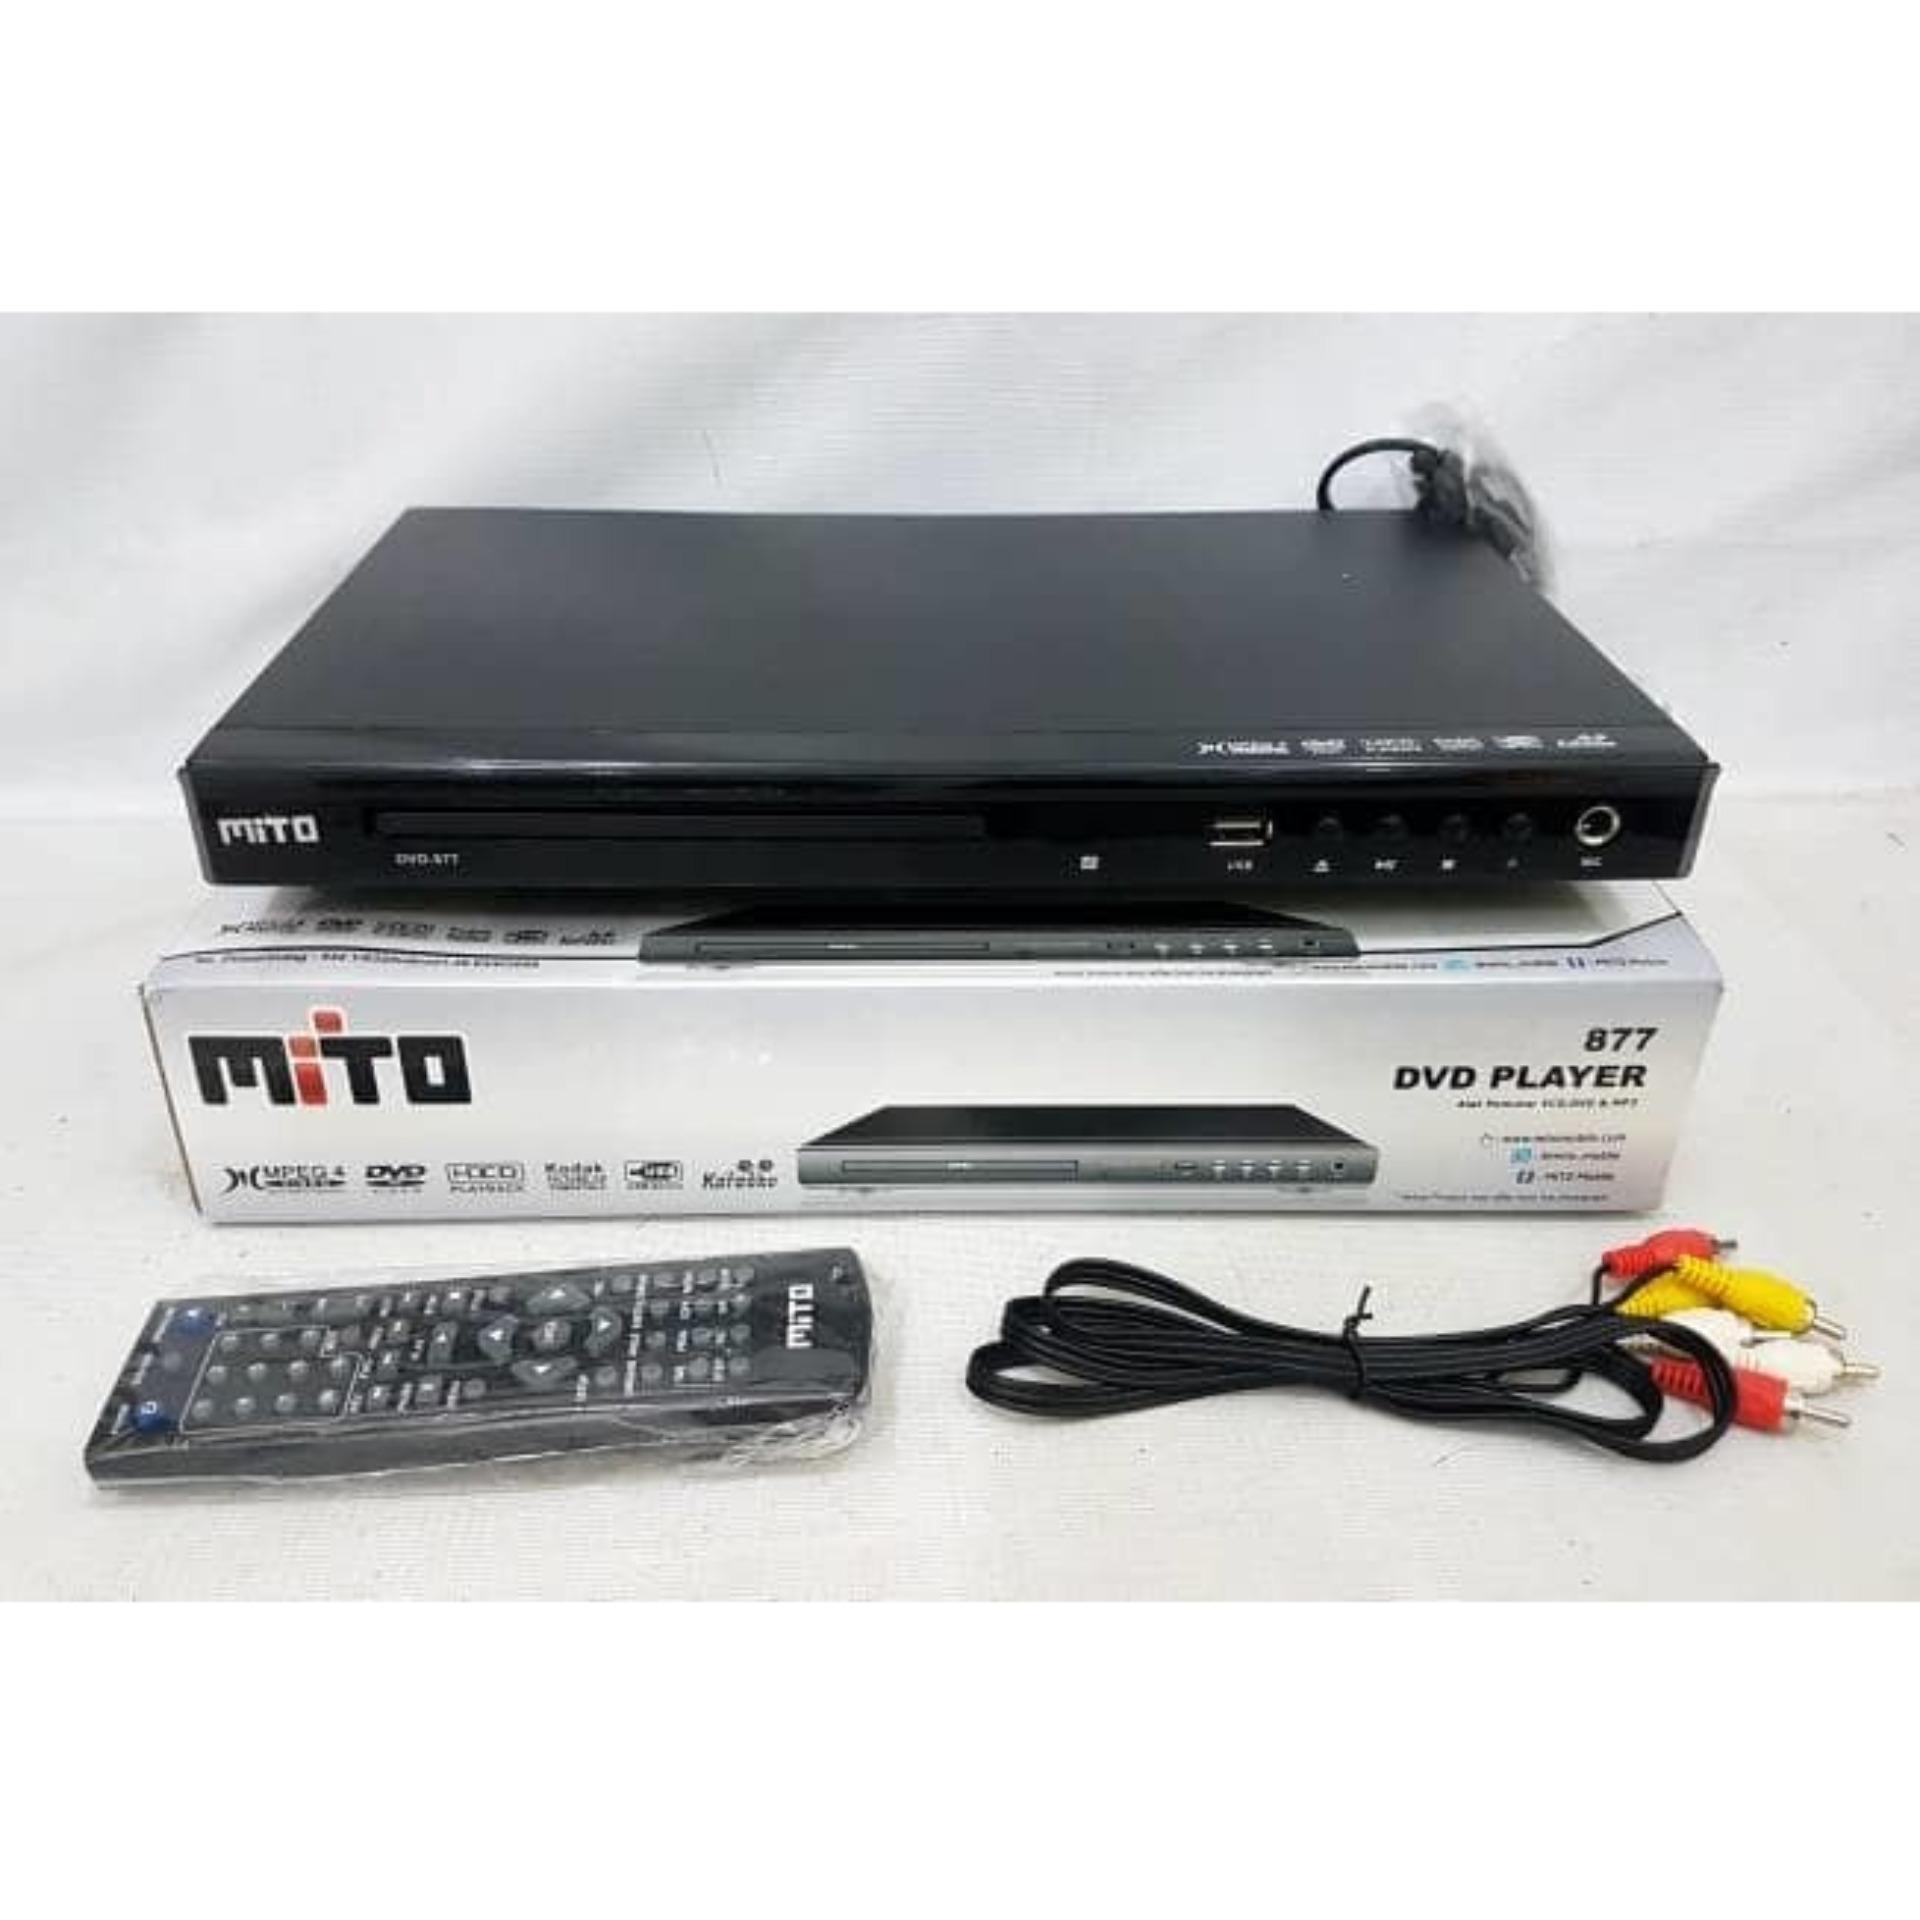 Mito DVD player 877